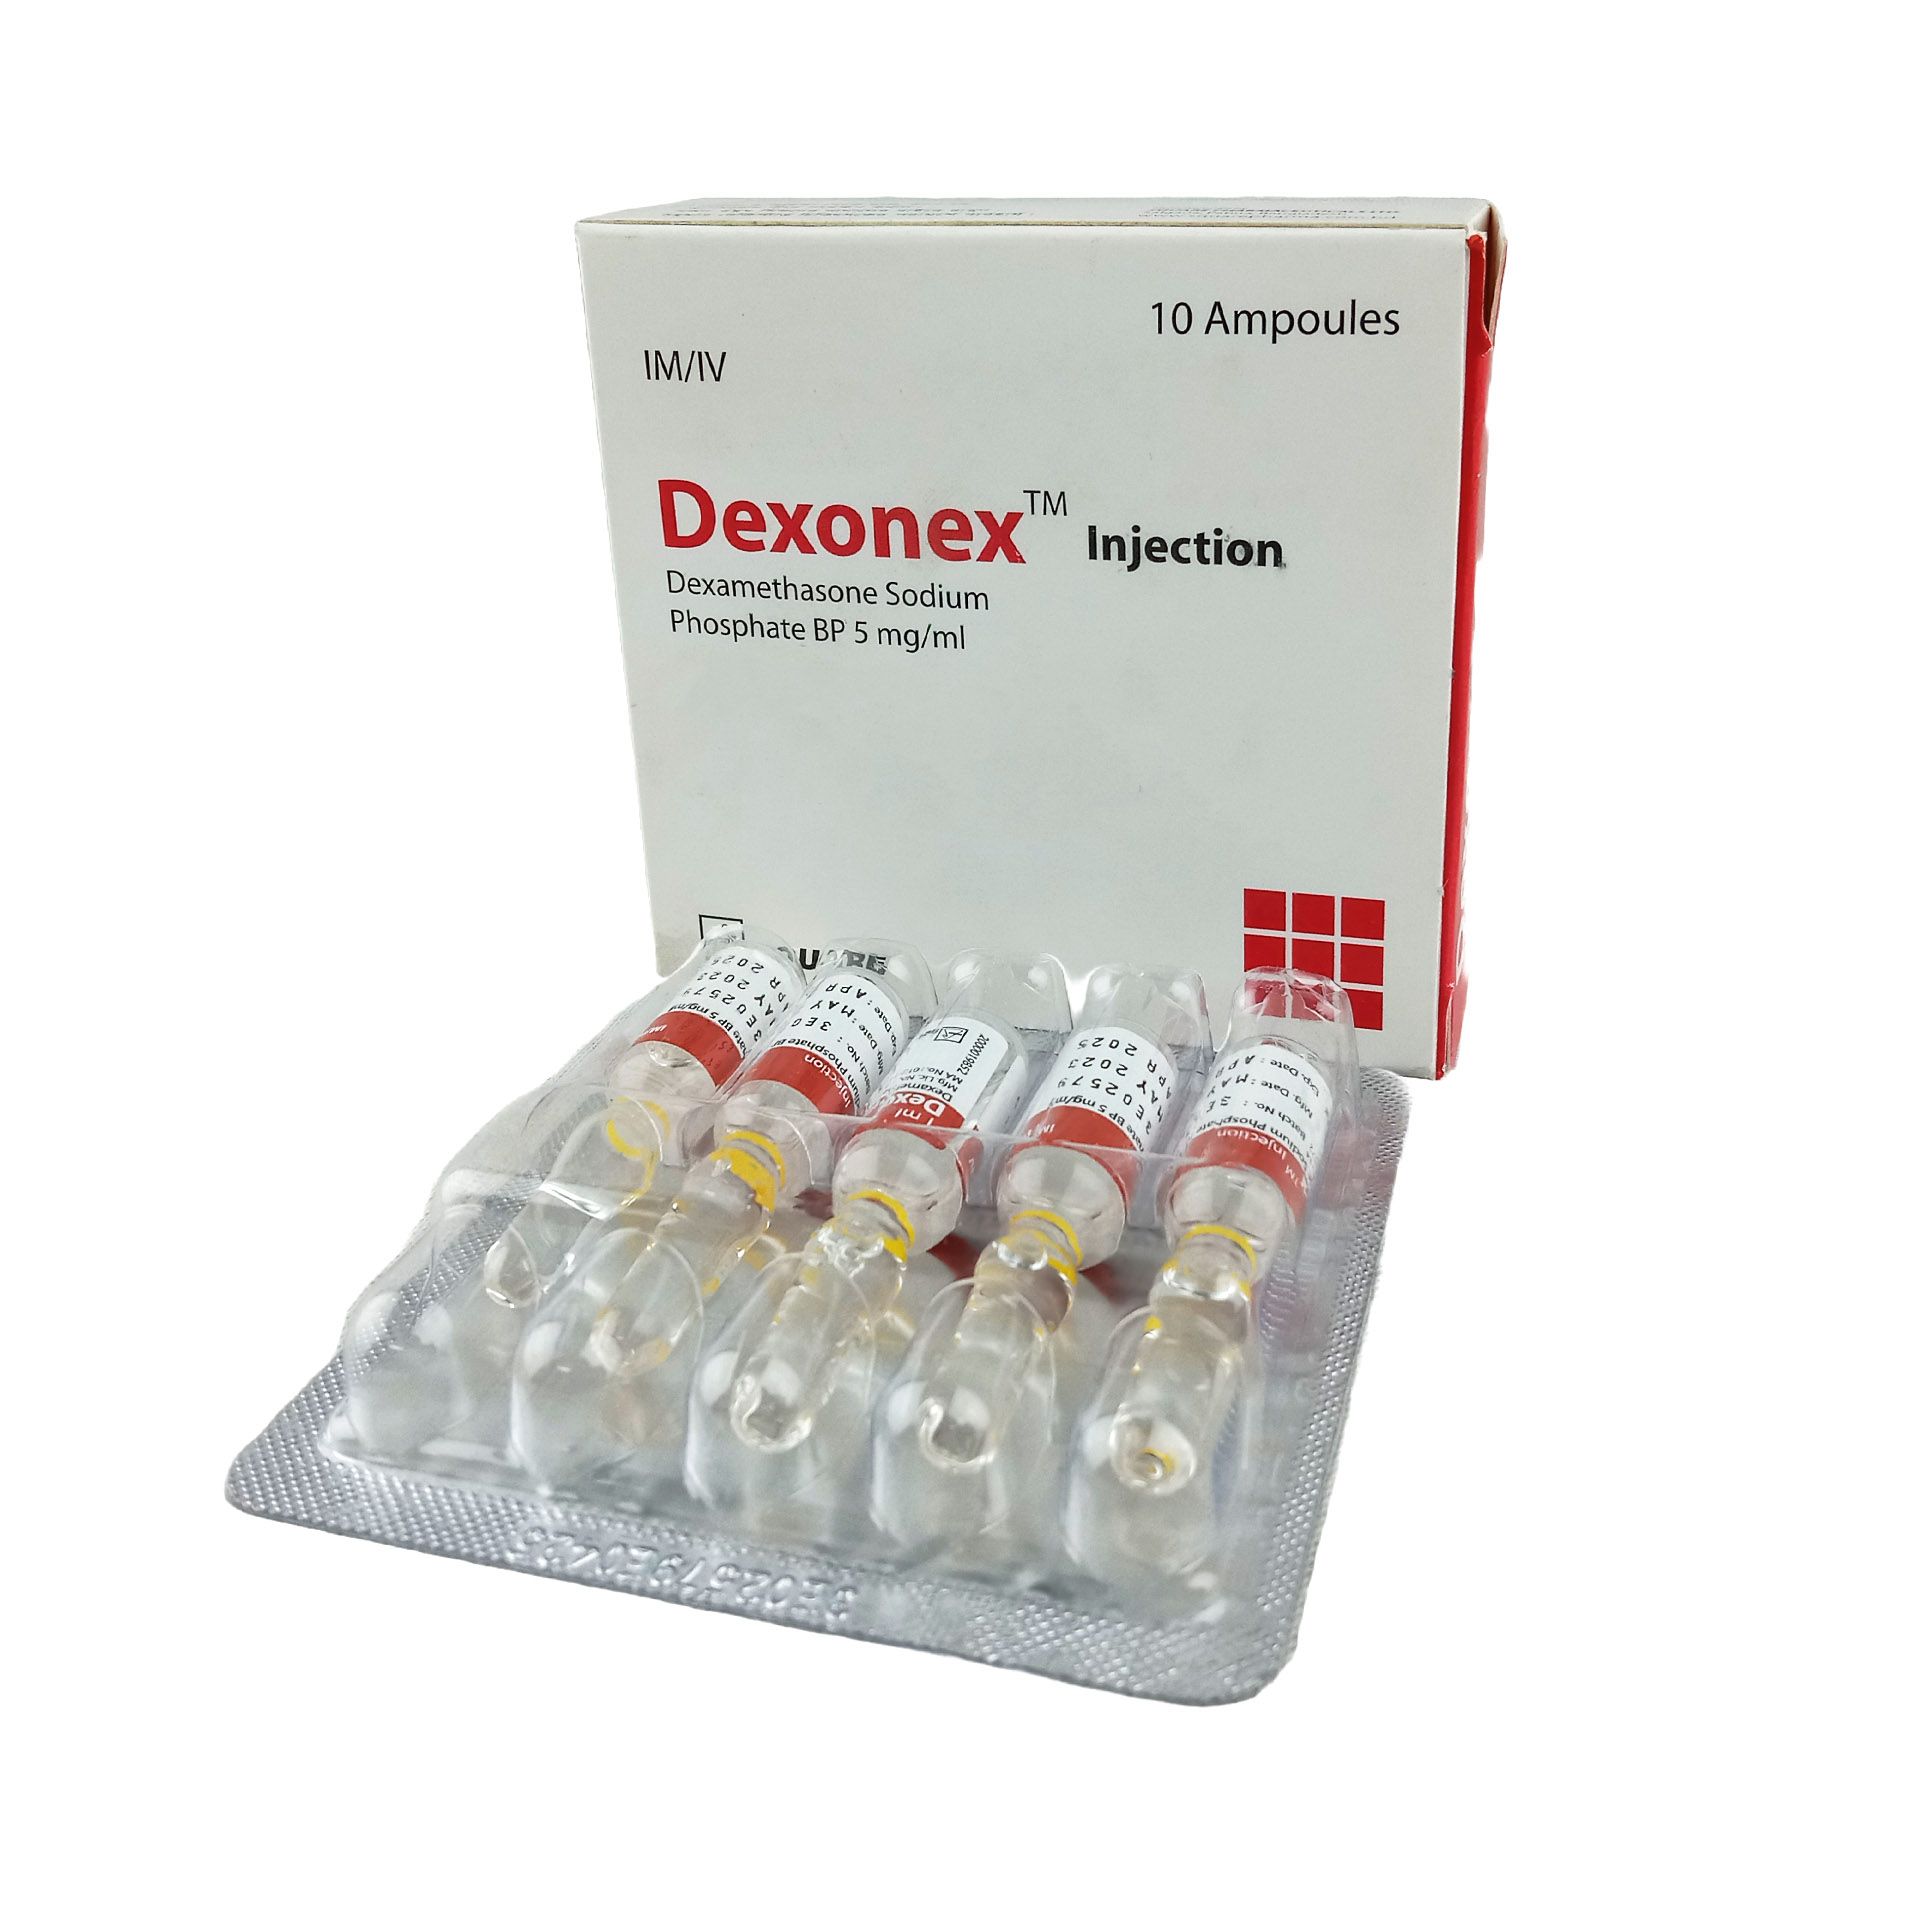 Dexonex IM/IV 5mg/ml Injection